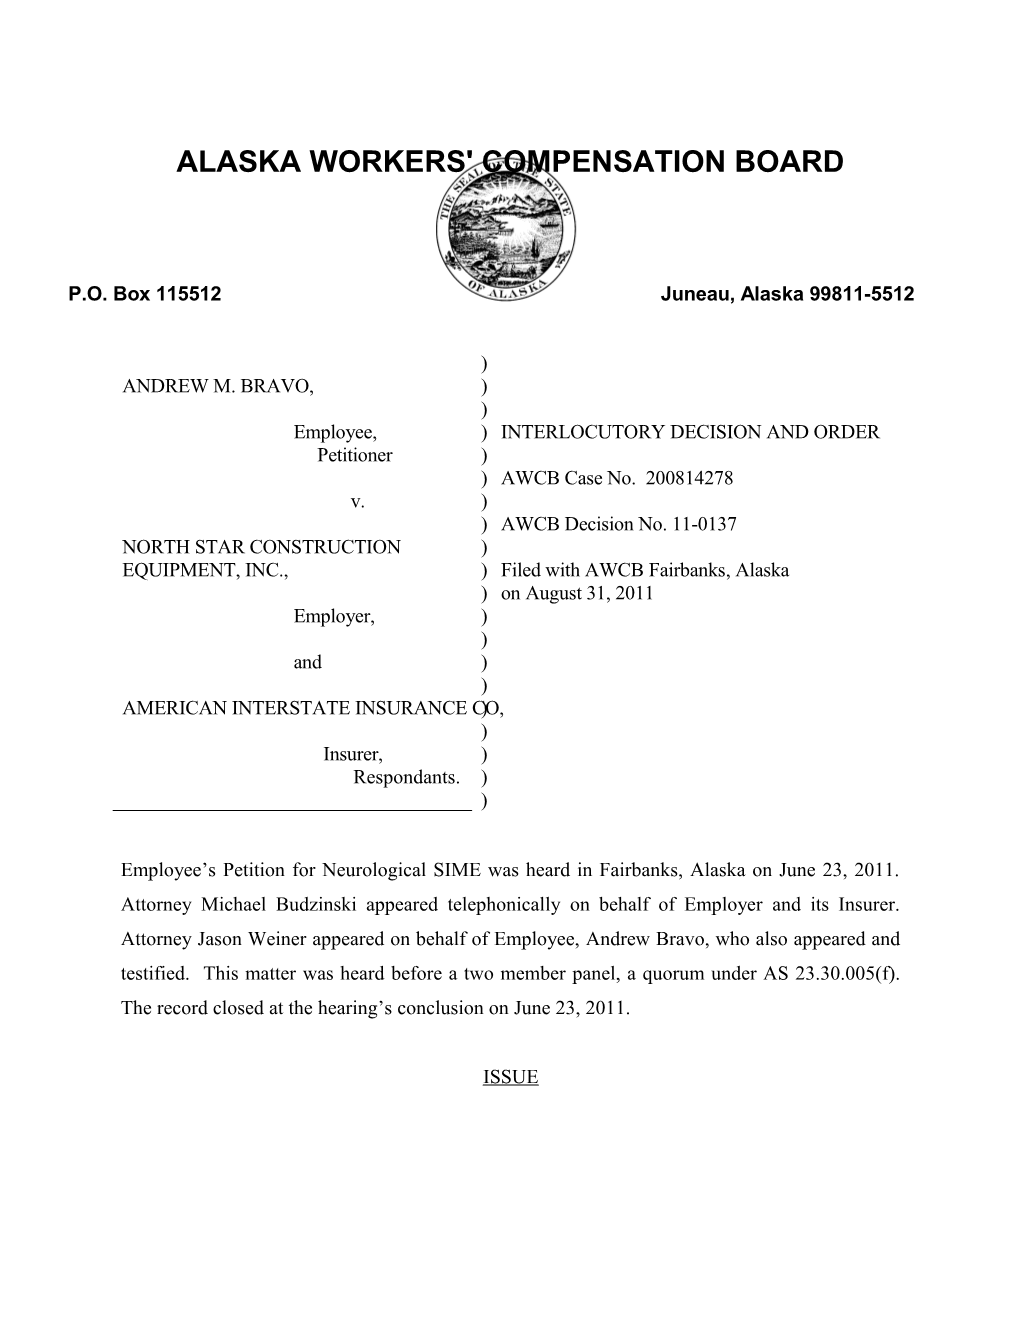 Alaska Workers' Compensation Board s35